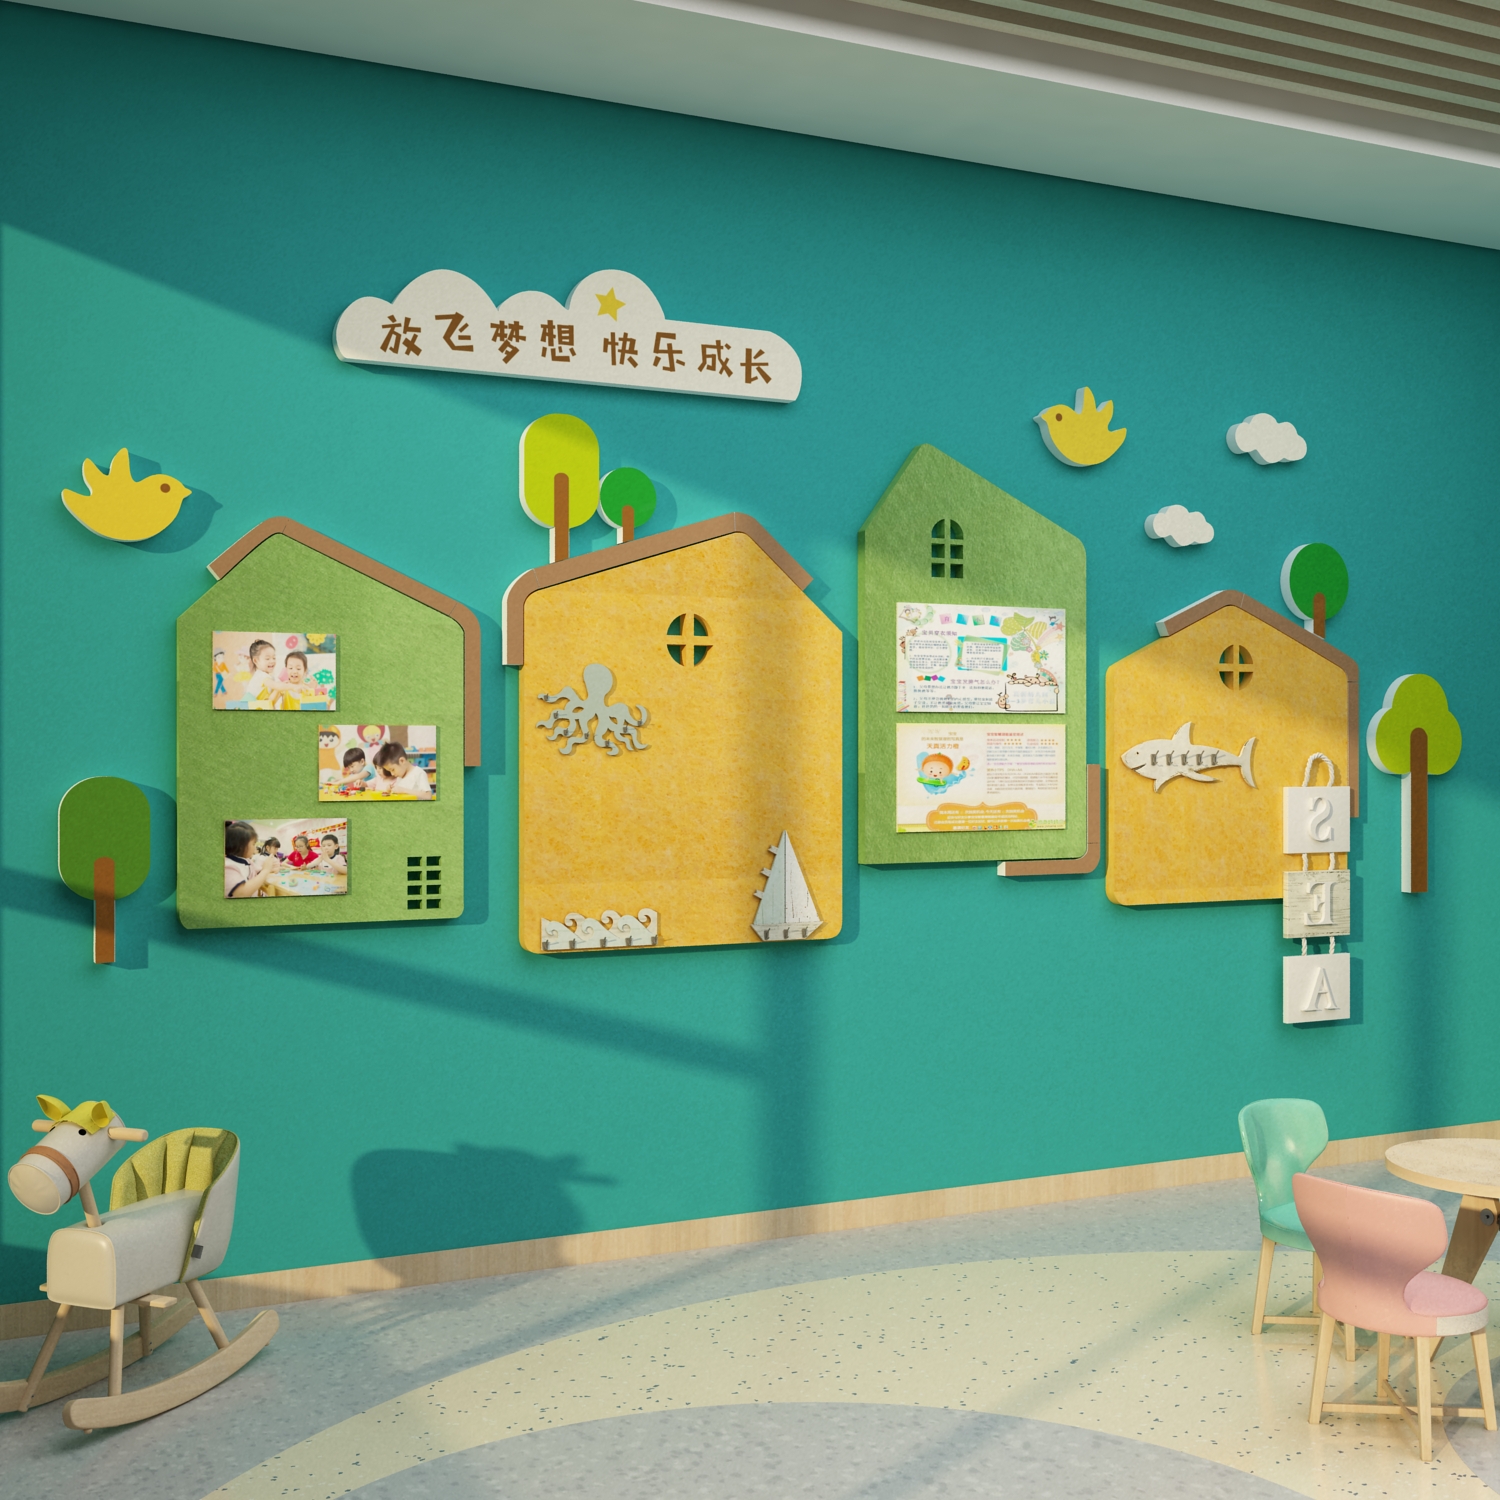 2N毛毡板墙贴教室布置幼儿园环创主题墙面装饰成品走廊楼梯大厅文